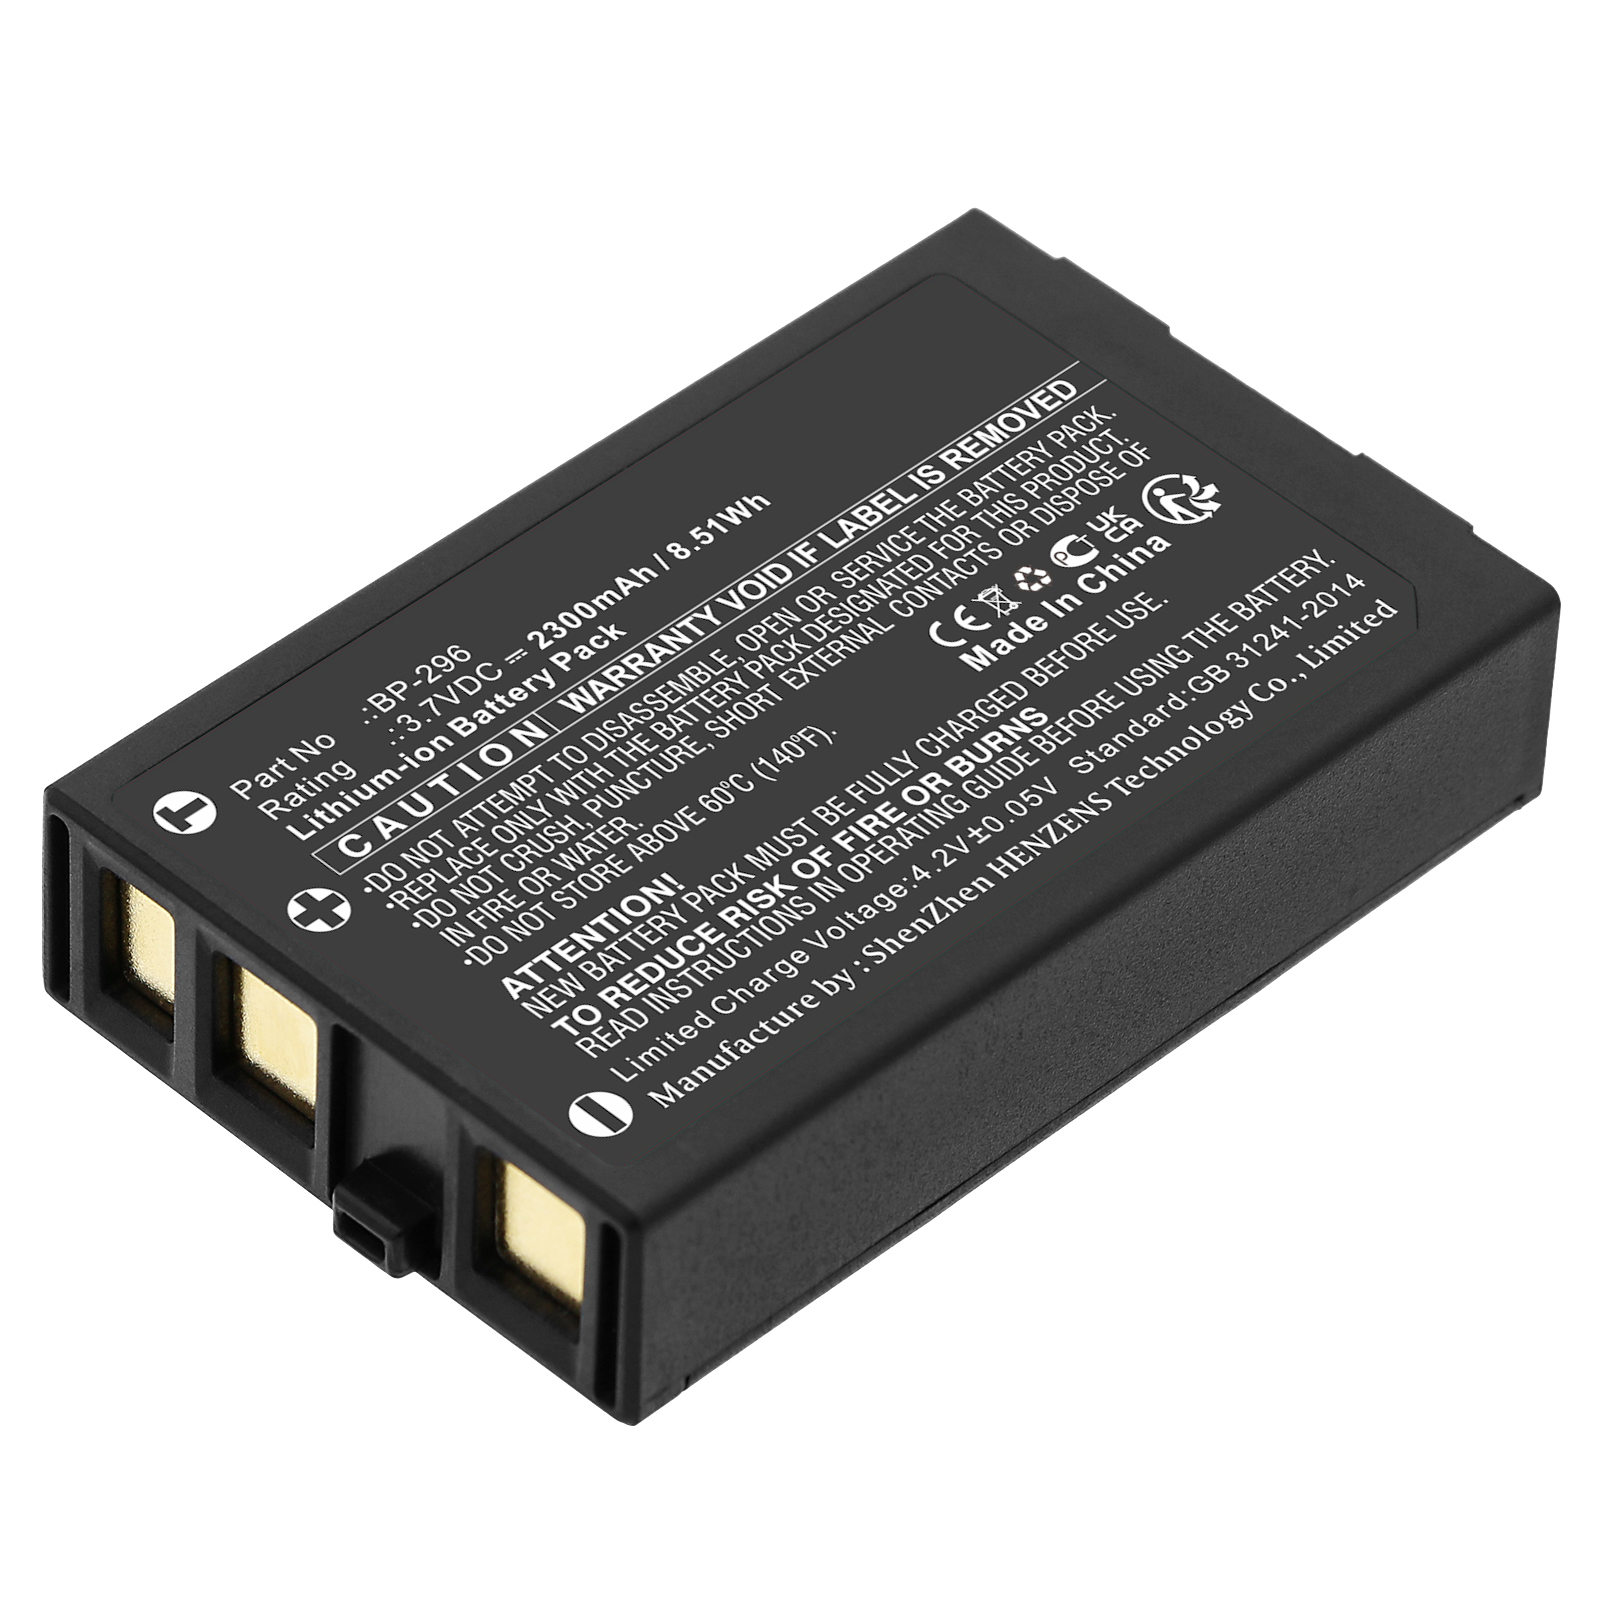 Synergy Digital 2-Way Radio Battery, Compatible with Icom BP-296 2-Way Radio Battery (Li-ion, 3.7V, 2300mAh)